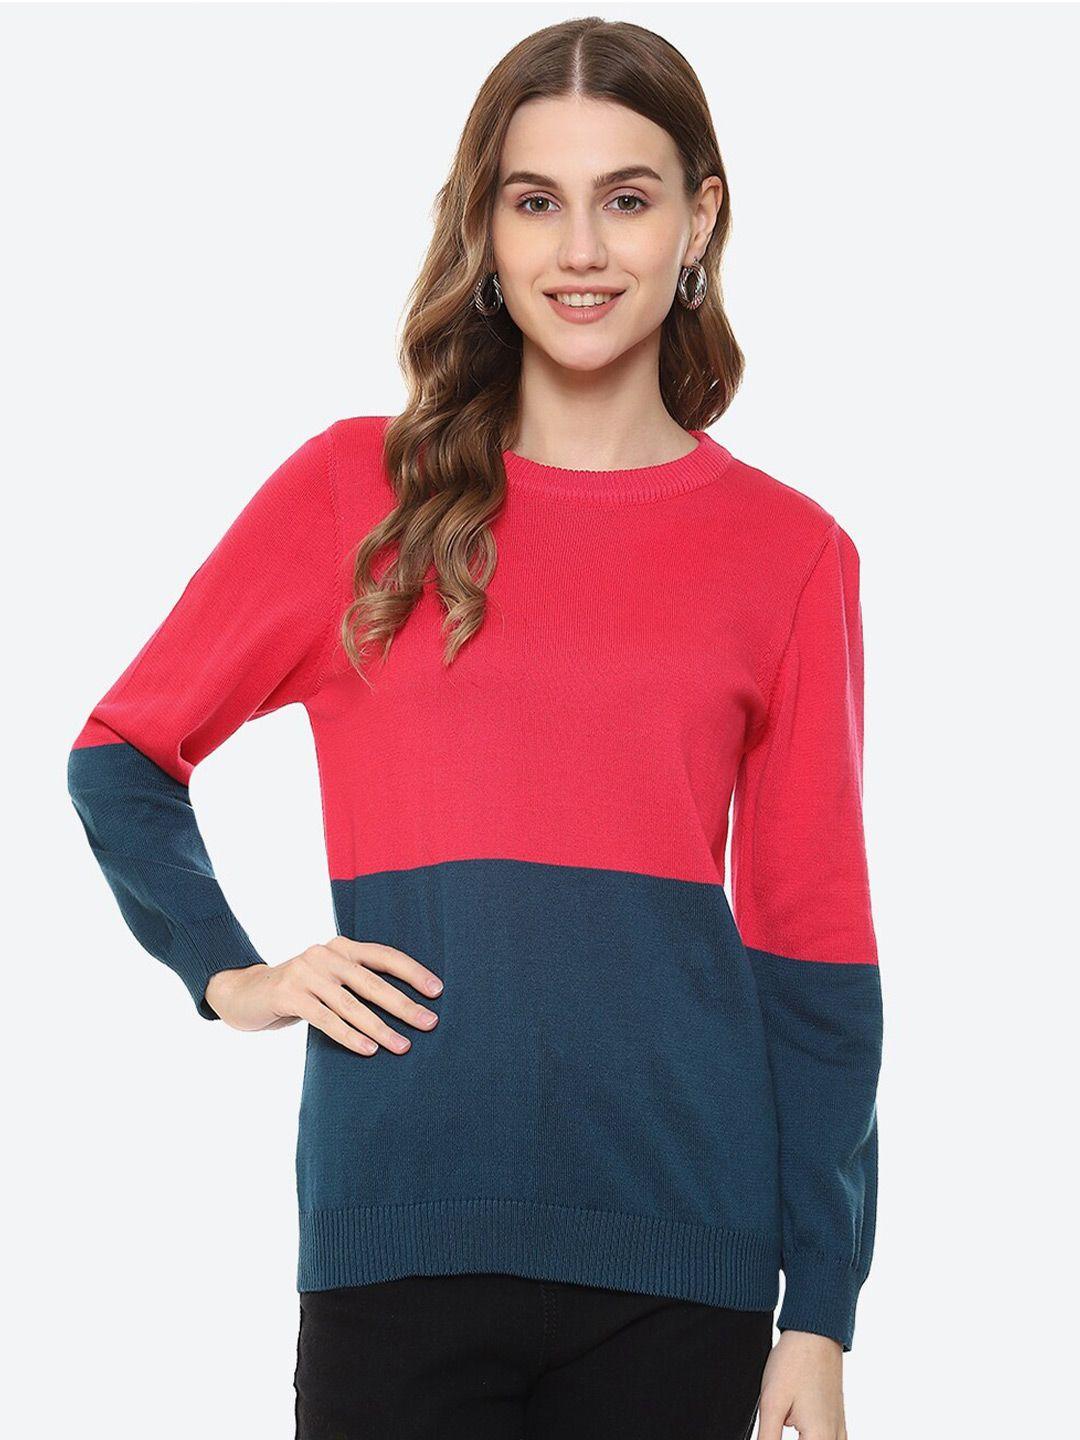 2bme-colourblocked-cotton-pullover